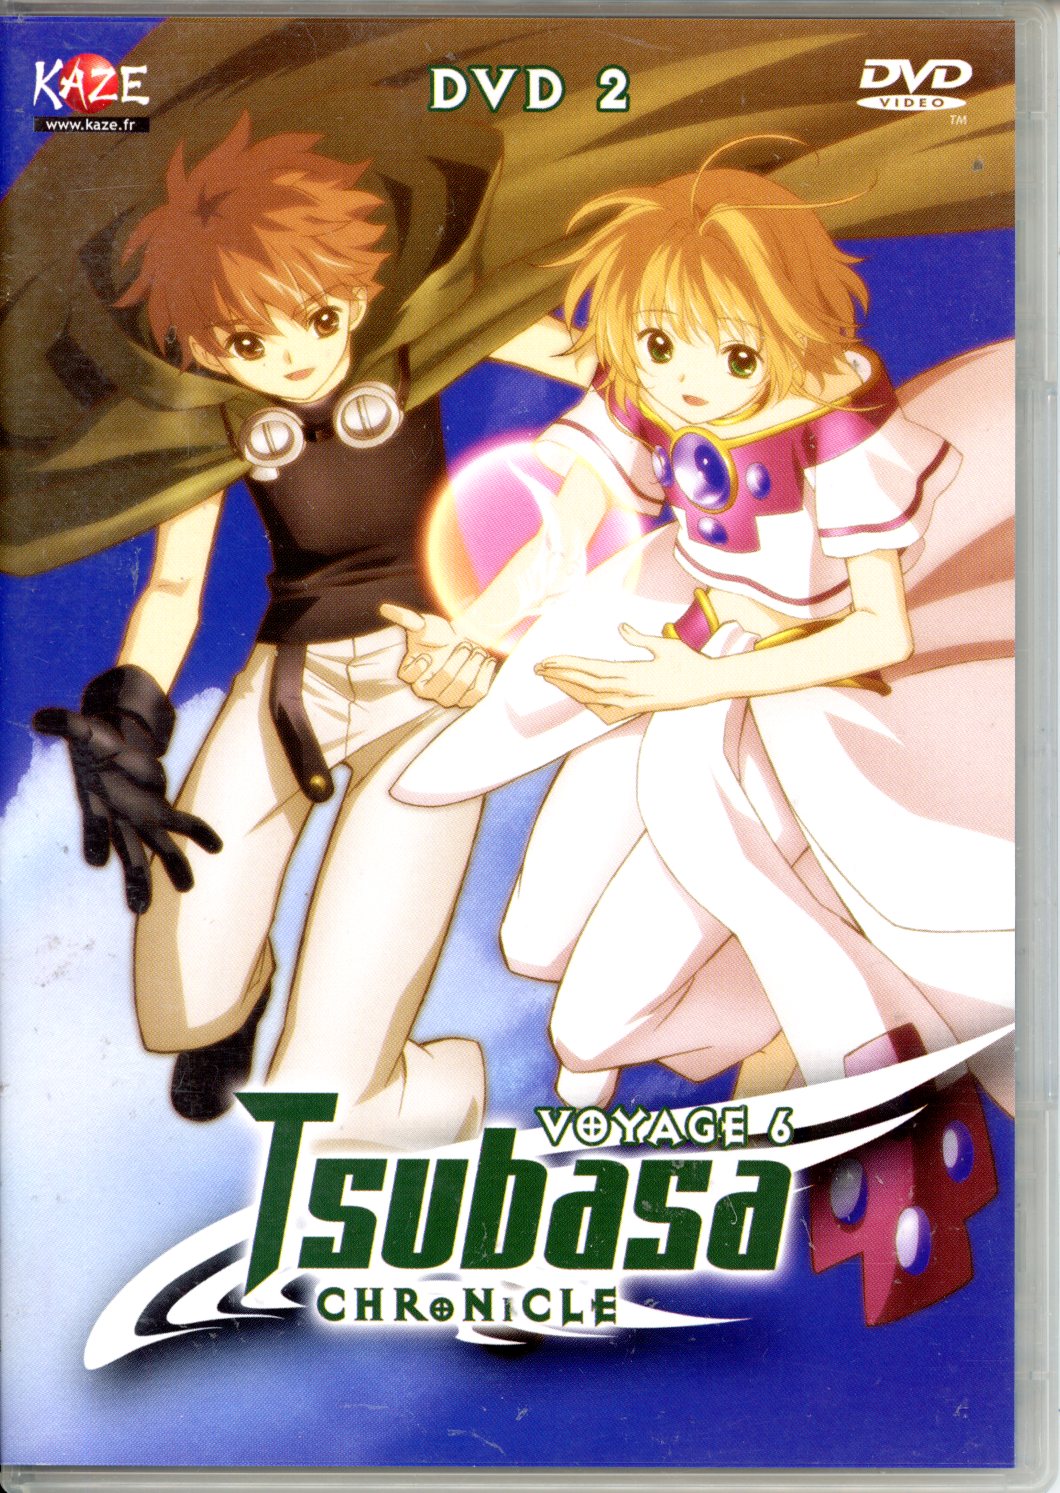 TSUBASA CHRONICLE VOYAGE 6 DVD 2